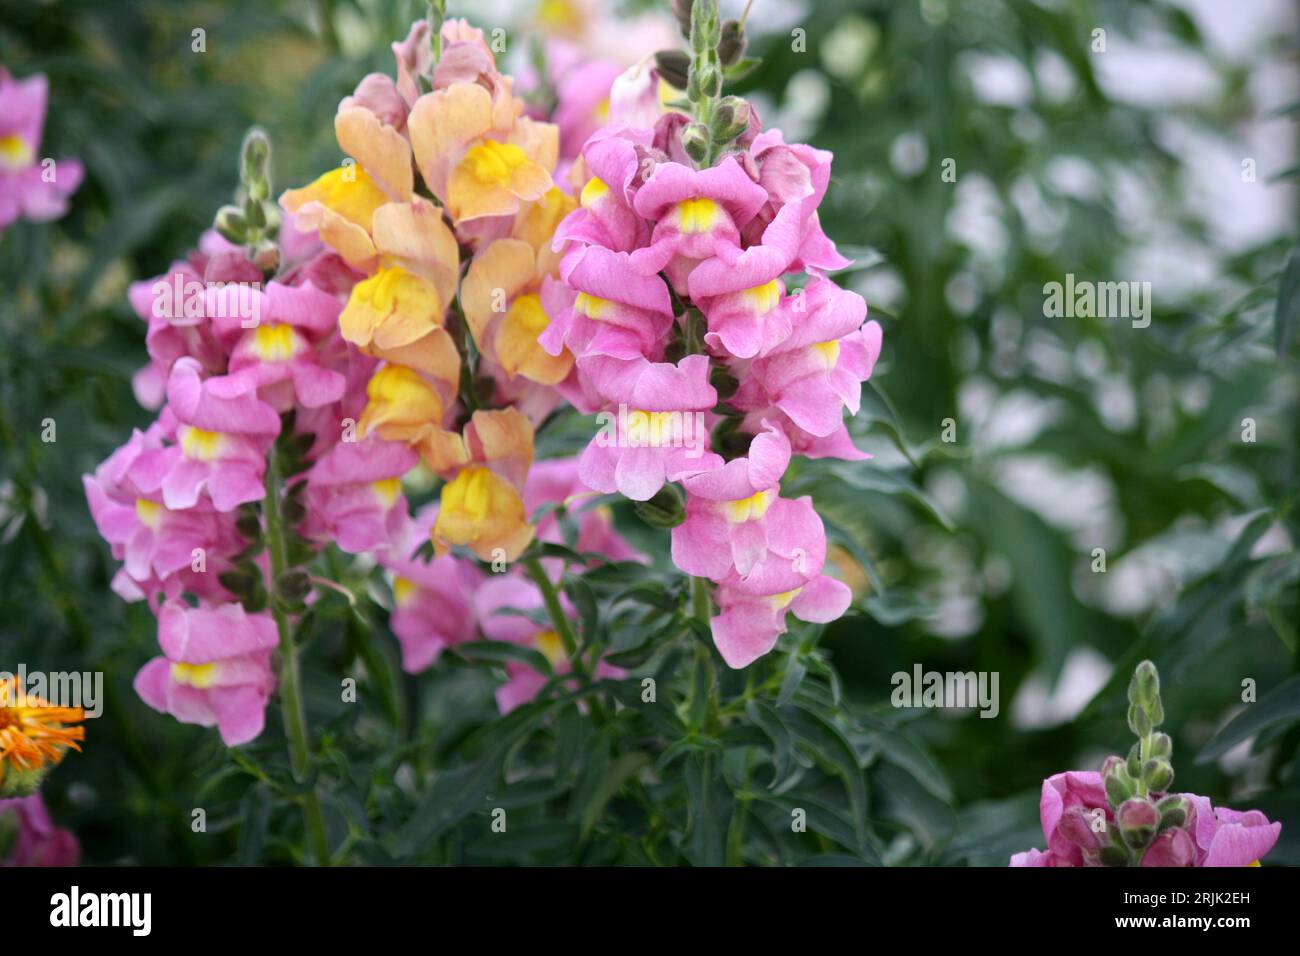 Cluster of pink and yellow Snapdragon (Antirrhinum majus) flowers : (pix Sanjiv Shukla) Stock Photo